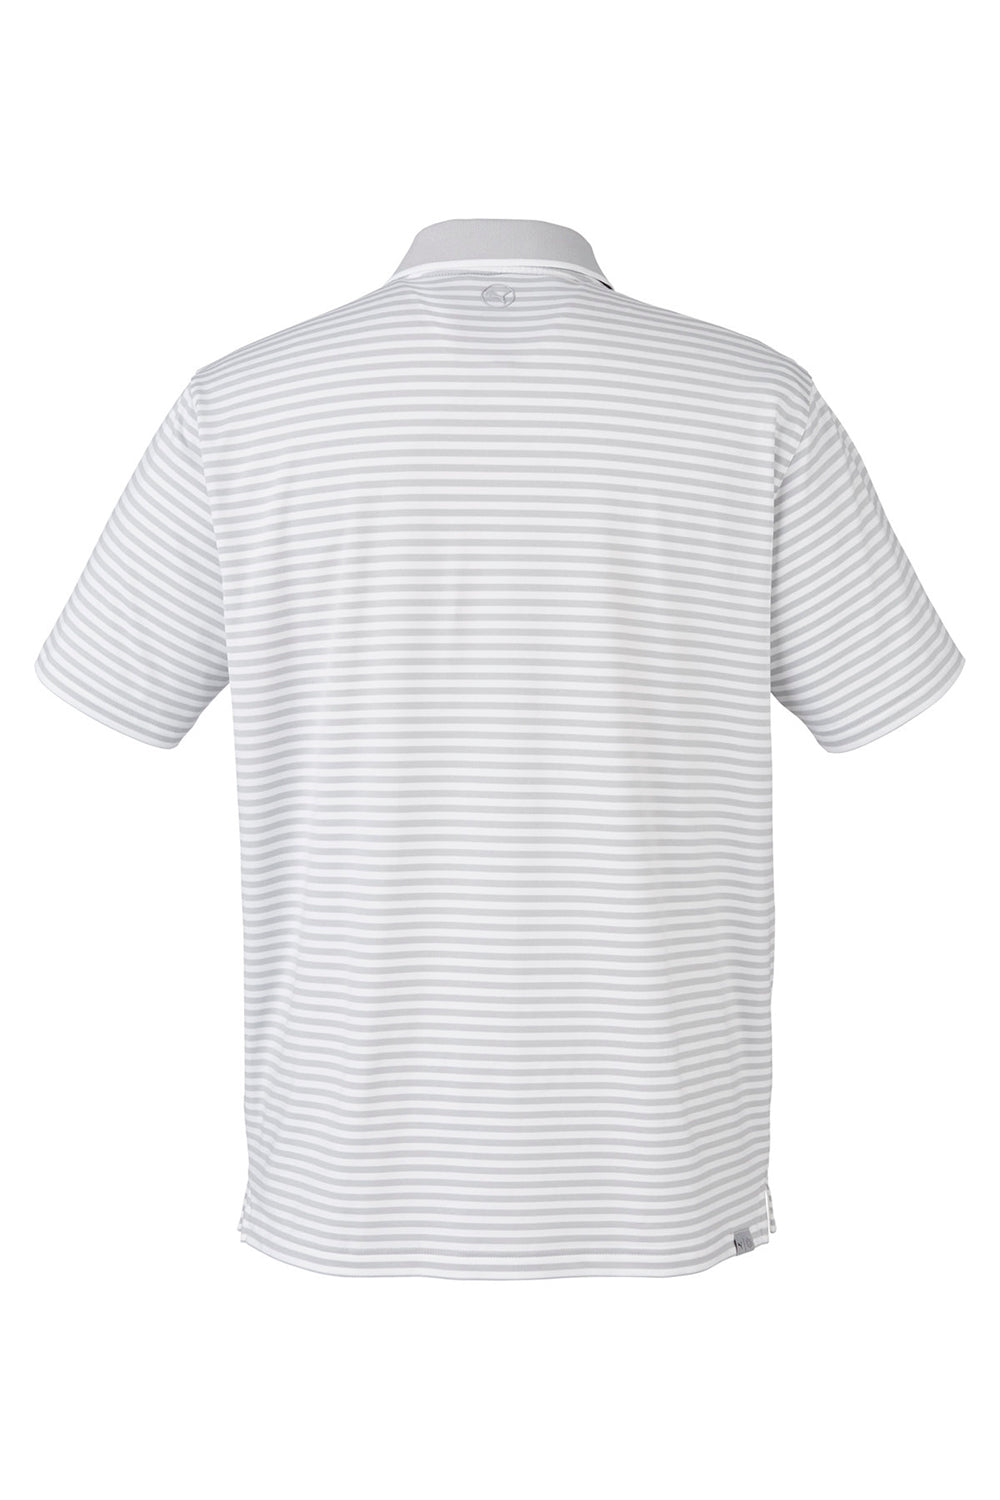 Puma 537447 Mens Mattr Feeder Short Sleeve Polo Shirt High Rise Grey Flat Back